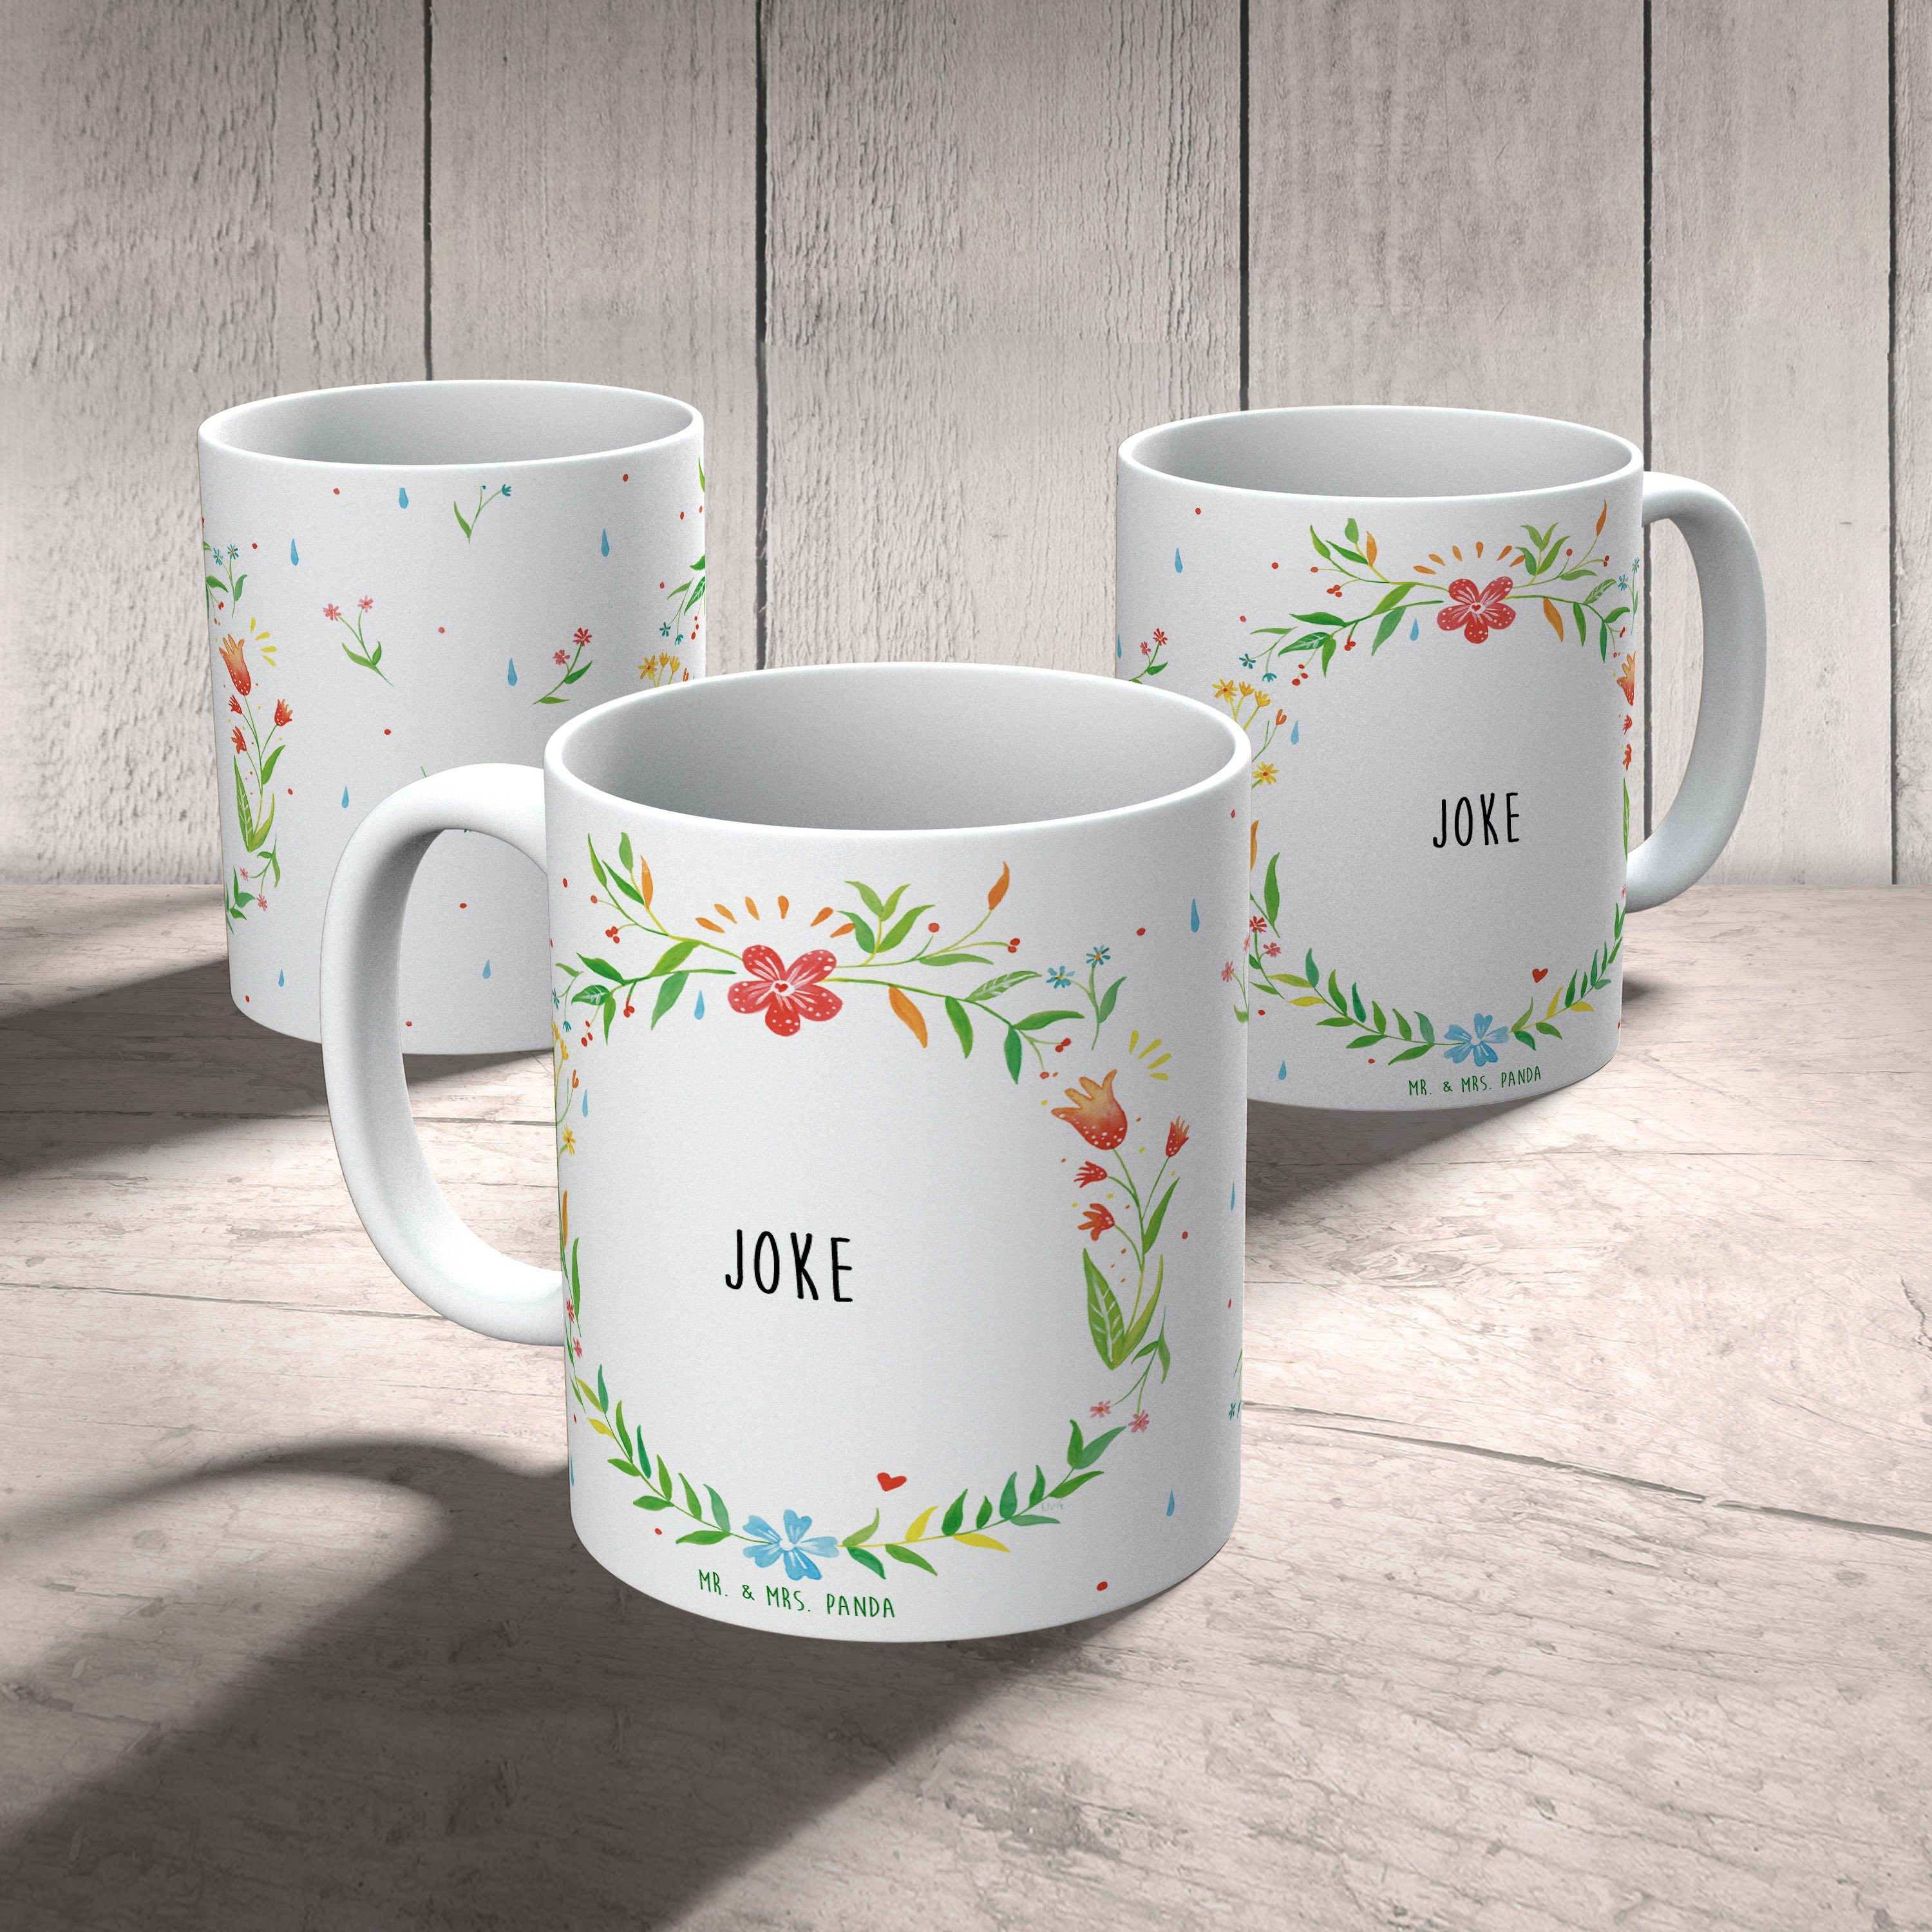 Mr. Joke Geschenk, Büro Keramik Mrs. Teetasse, Kaffeetasse, Tasse, - Teebecher, & Tasse Becher, Panda